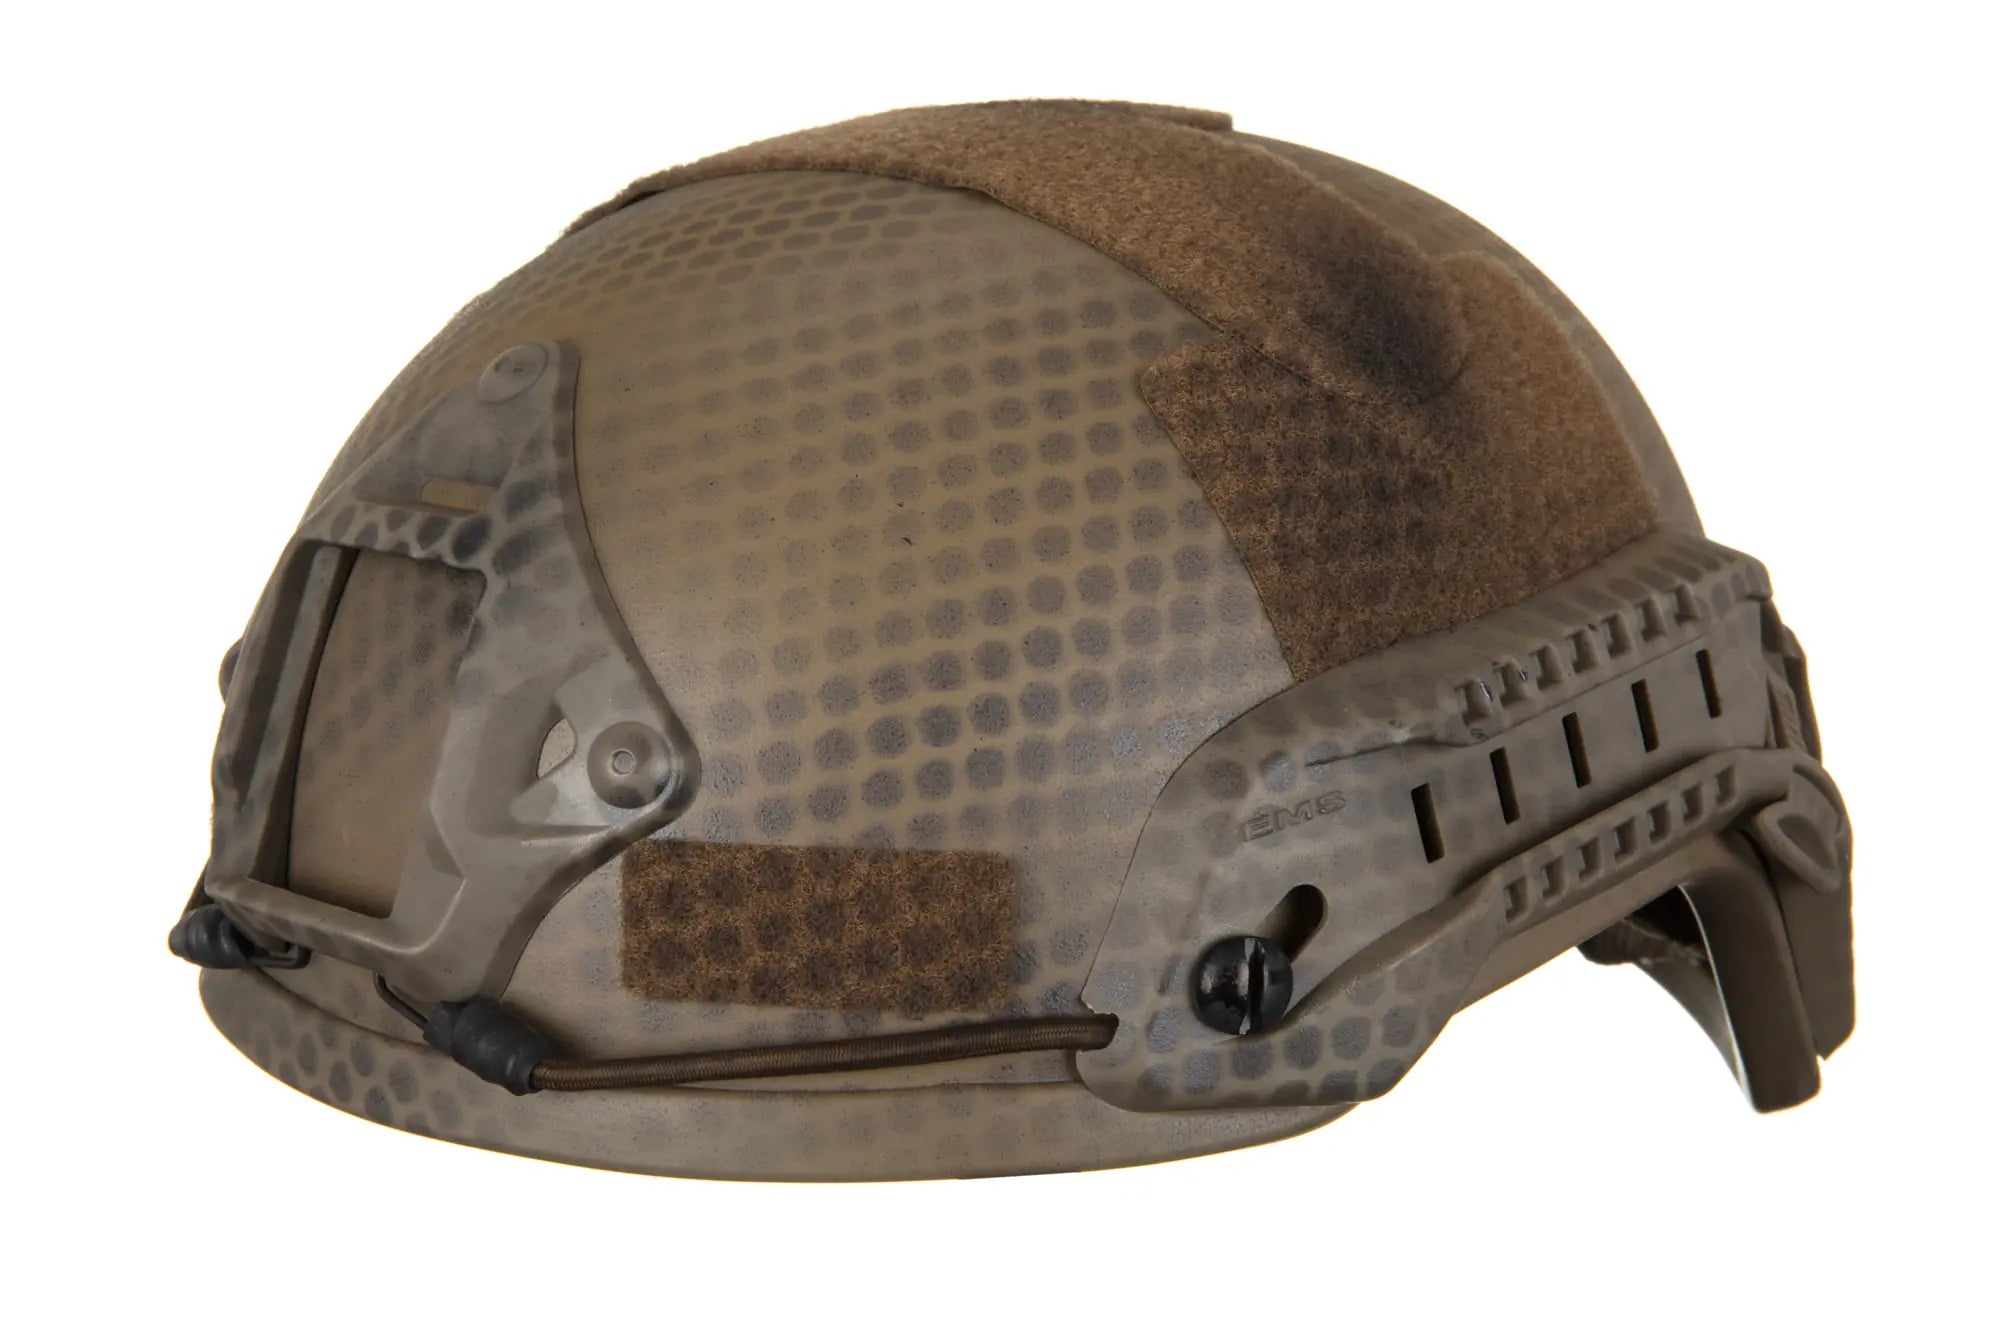 Helmet replica Emerson ACH Mich 2001 Special Action v. Seal-2